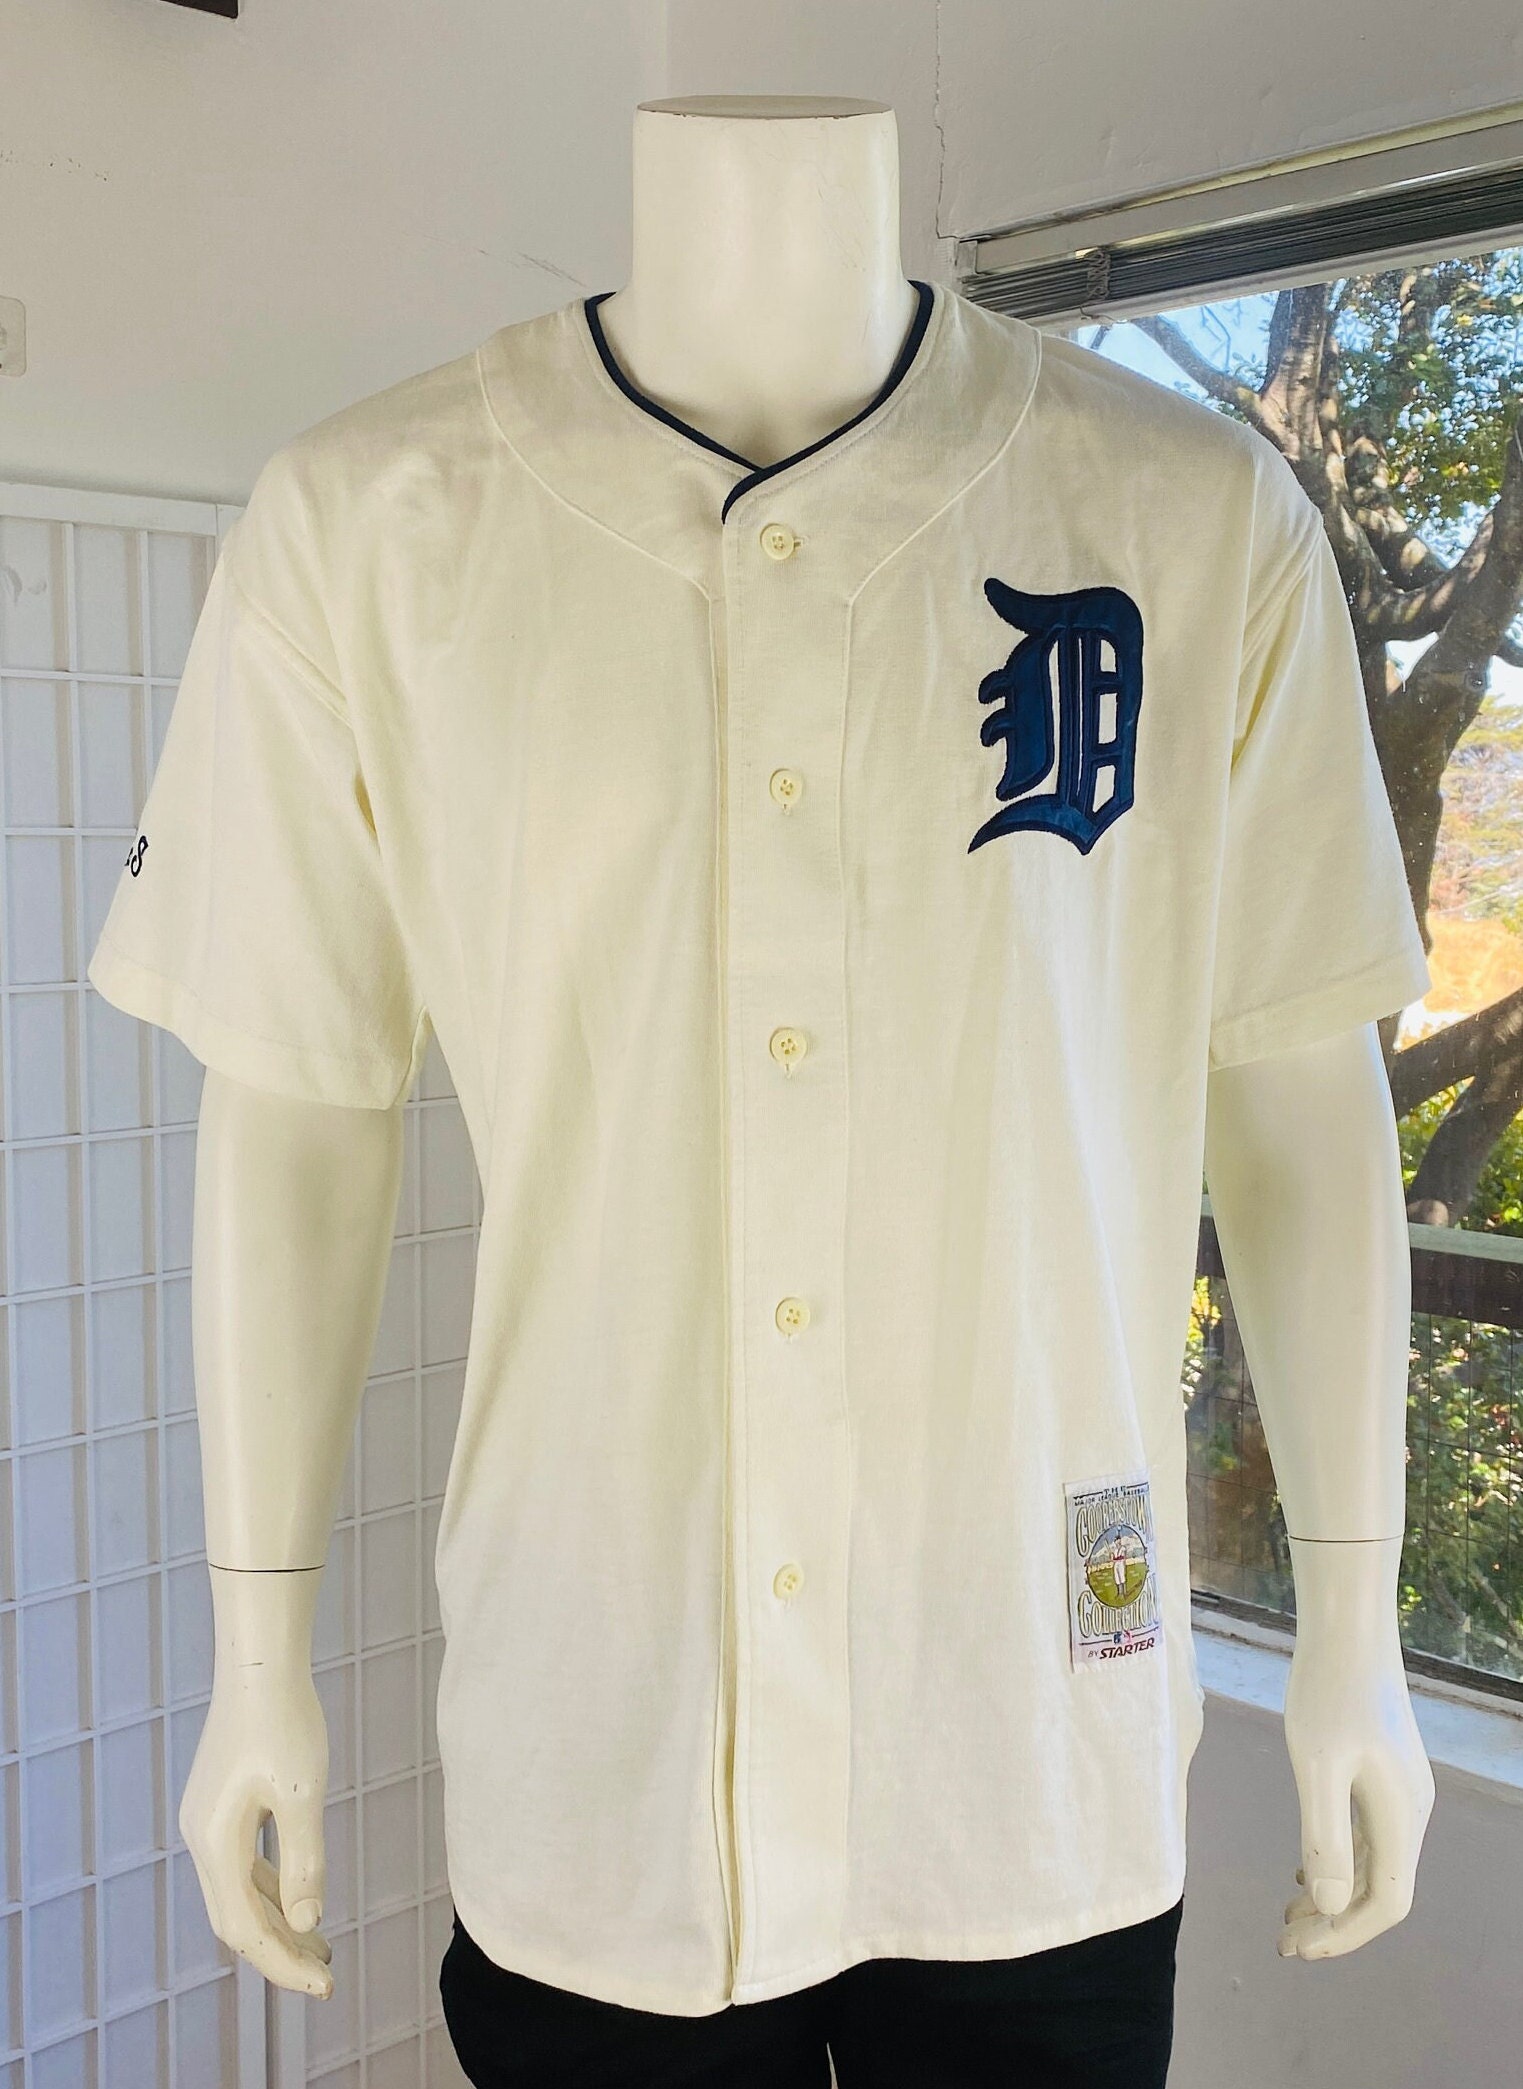 vintage detroit tigers jersey